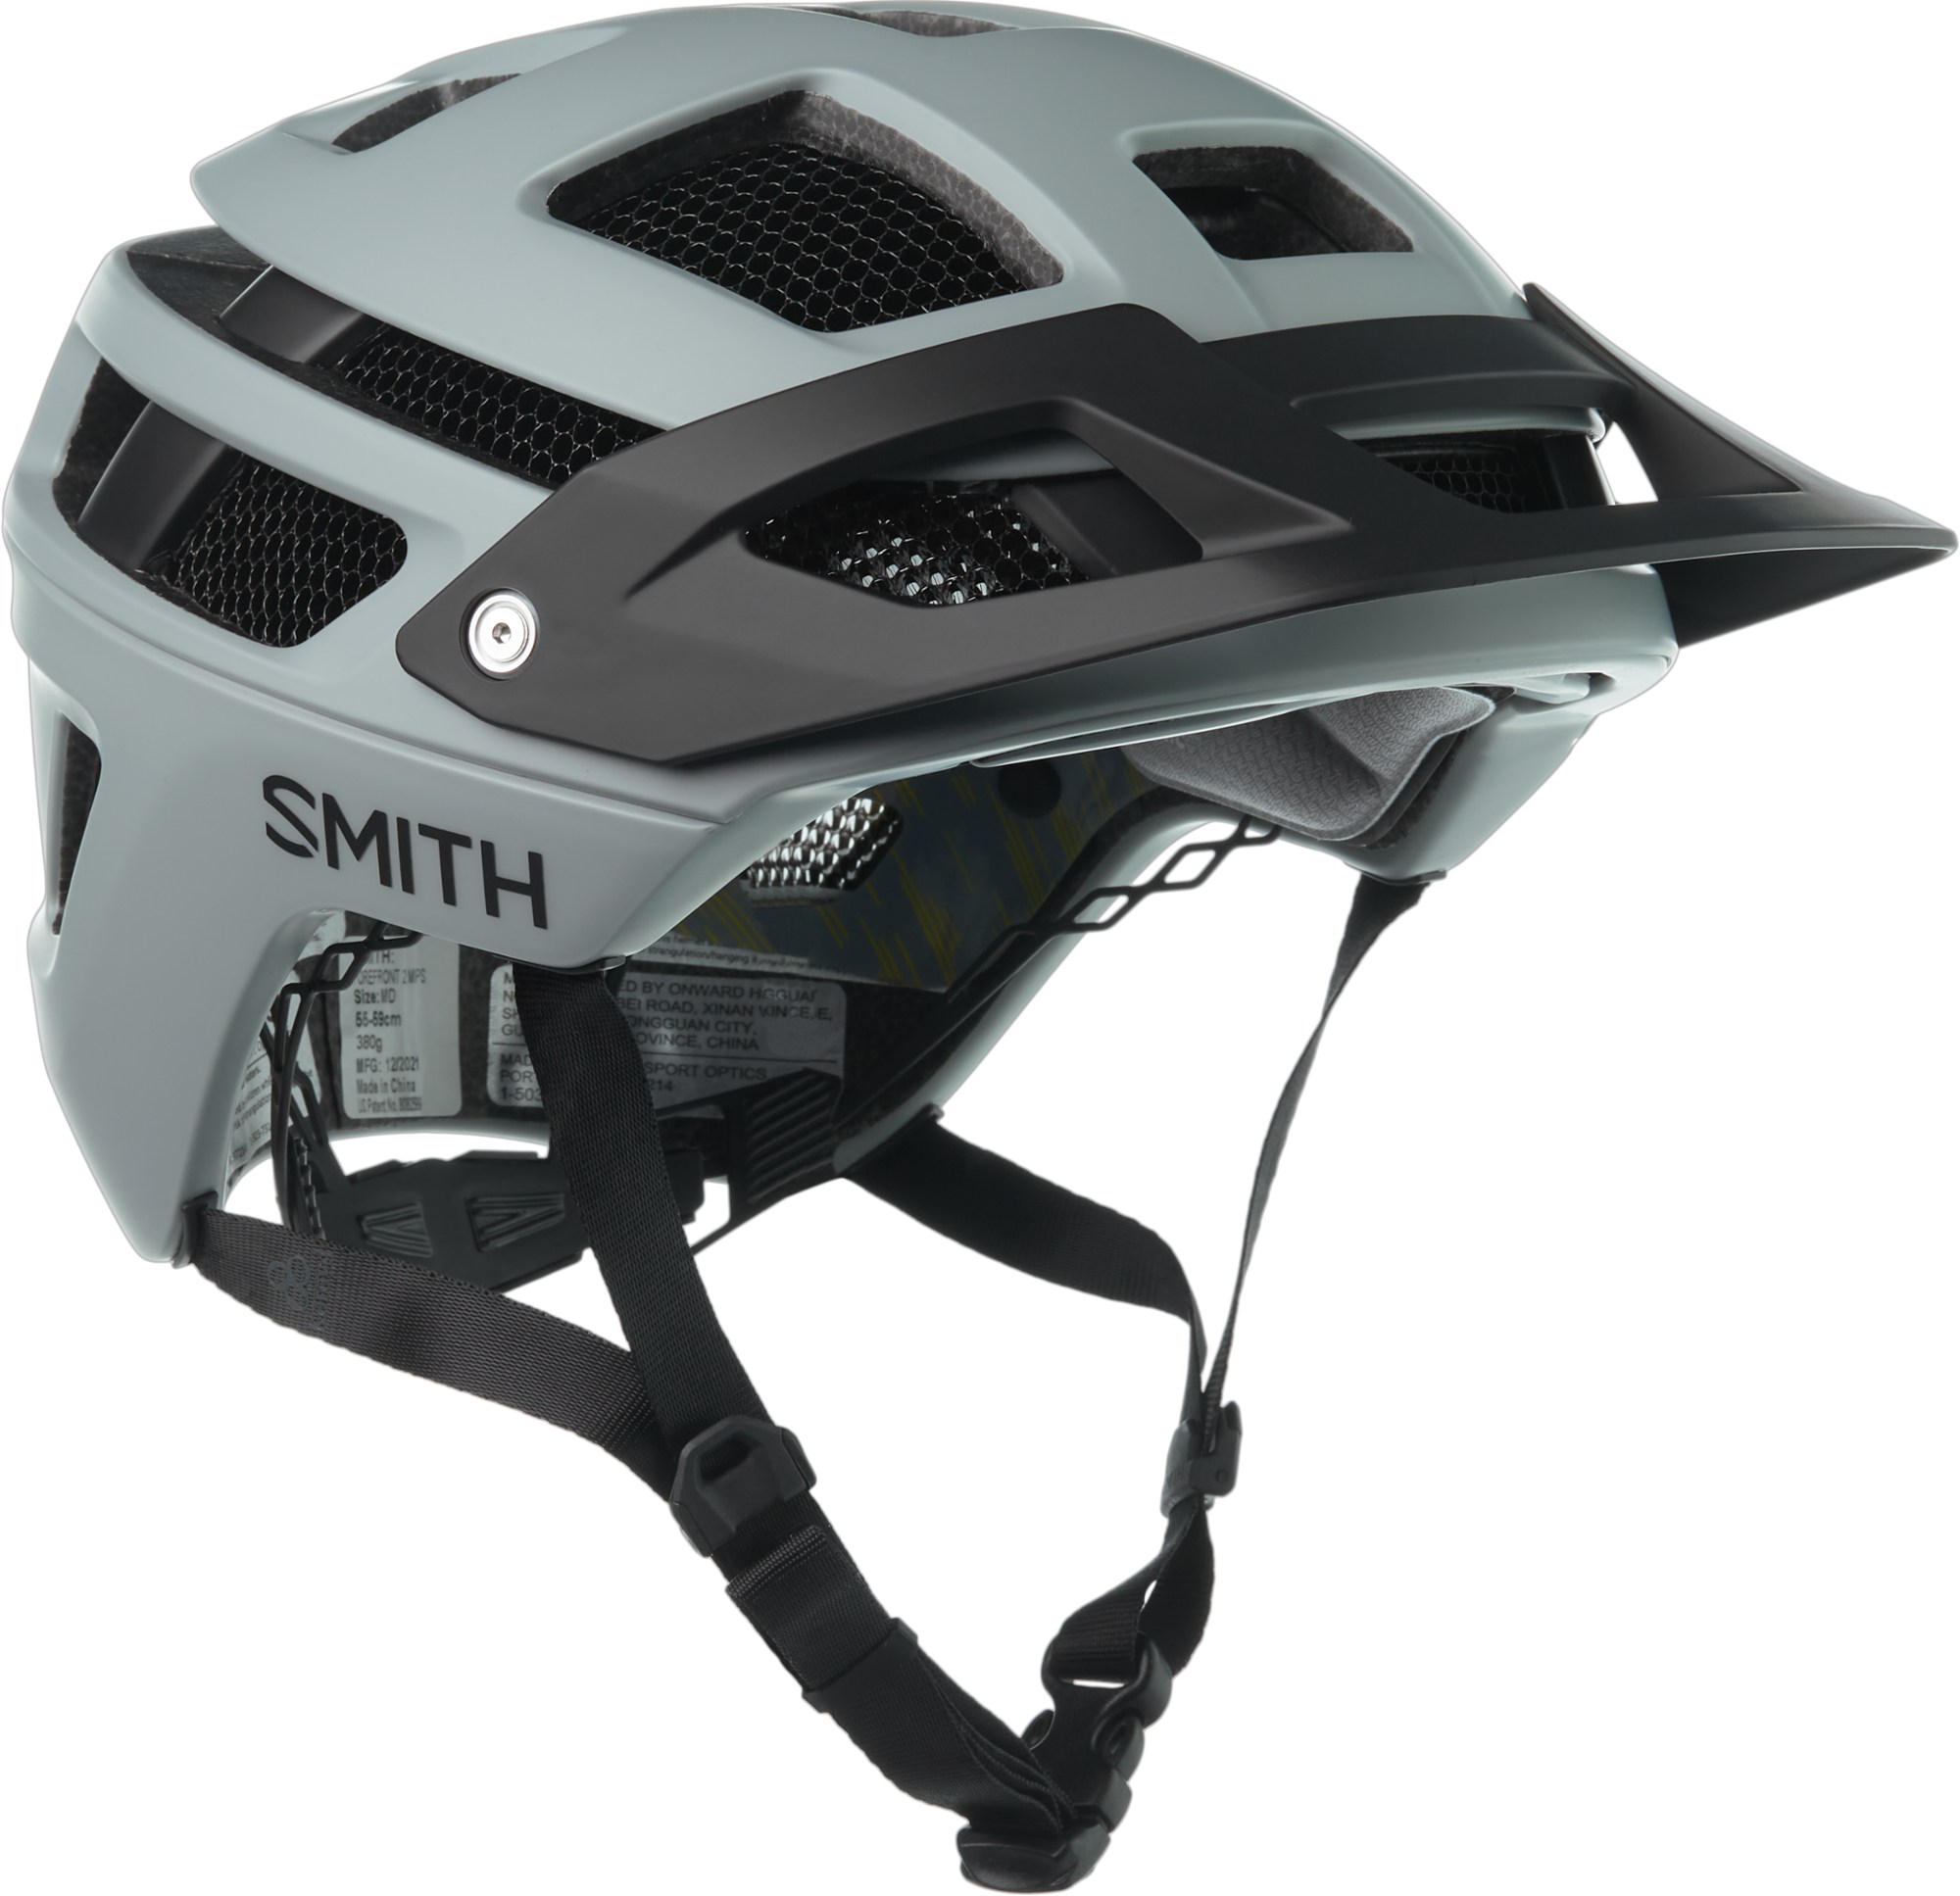 Велосипедный шлем Forefront 2 MIPS Smith, серый